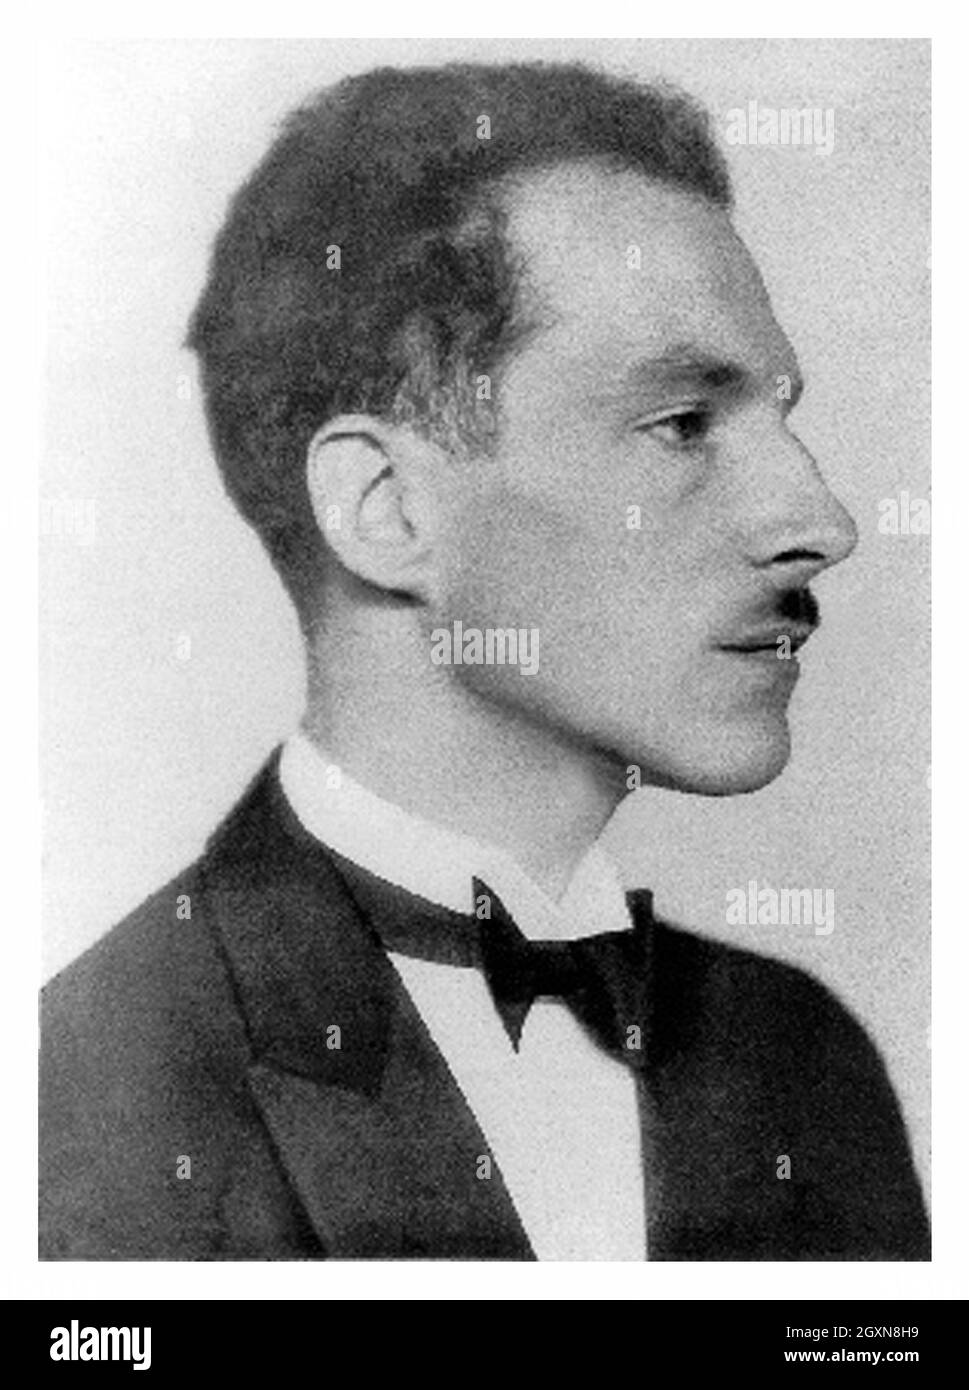 1930 c., USA : The russian born inventor Leon Theremin ( born Lev Sergeyevich Termen , 1896 - 1993 ). Invented the modern THEREMIN electronic instrument . Unknown photographer . - MUSICISTA - MUSICA CLASSICA - Léon Théremin - classical - PORTRAIT - RITRATTO - HISTORY - FOTO STORICHE - solista - soloist - ELETTRONICA - ELECTRONIC - INVENZIONE - INVENTION - Elettricità - Electricity - KITSCH - thereminista - INVENZIONE MODERNA - Modernity - modernità - INVENTORE - INVENTOR ---  Archivio GBB Stock Photo